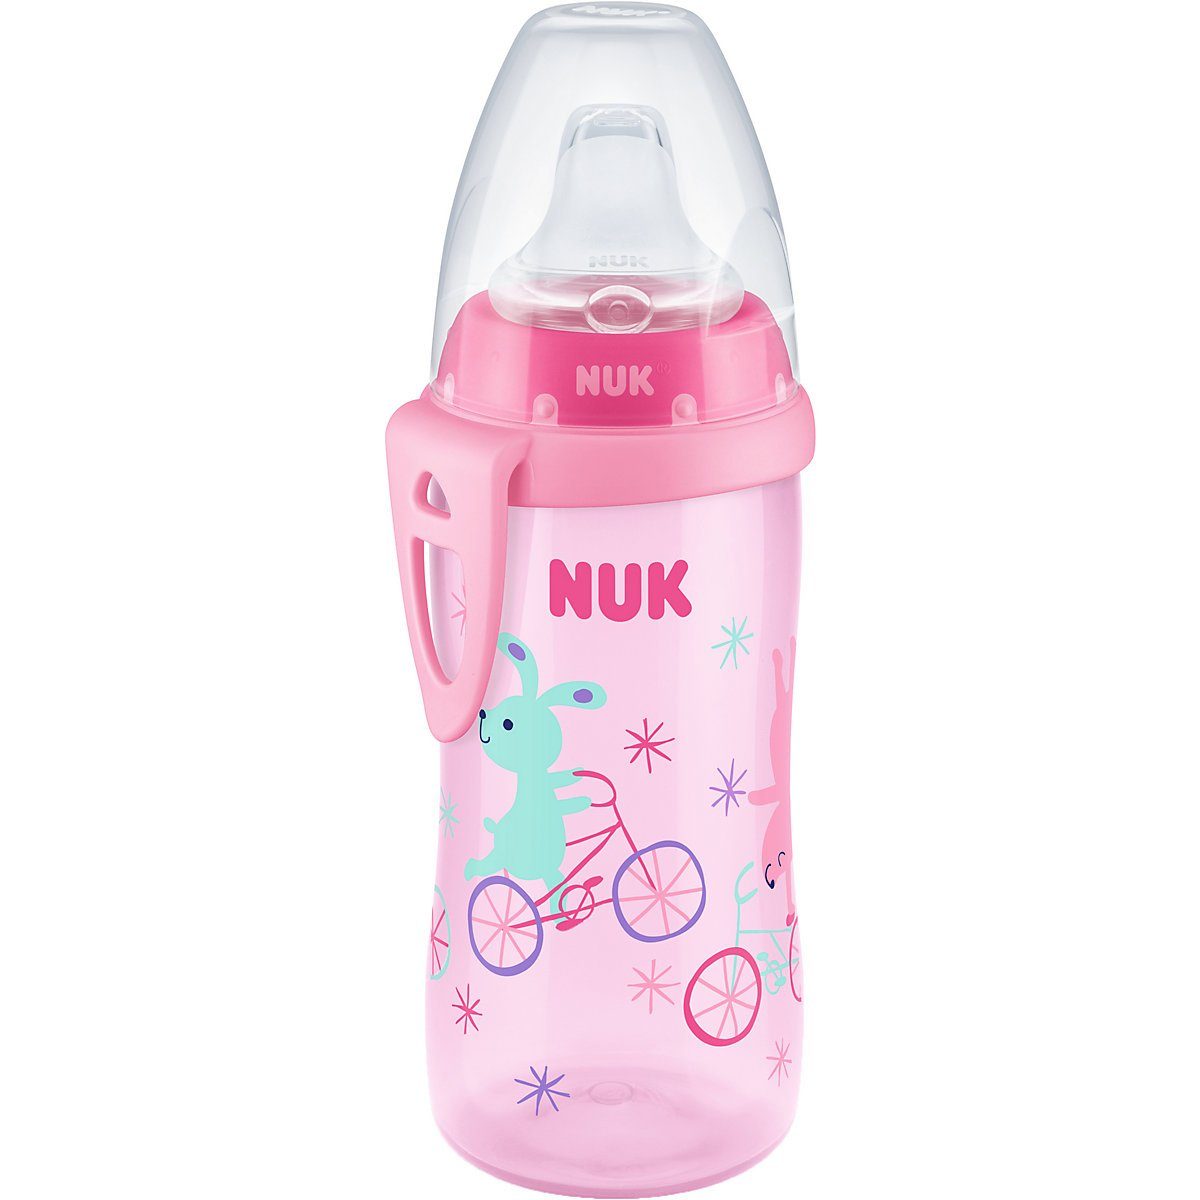 Kinder Babyernährung NUK Trinklernbecher NUK Active Cup mit Soft-Trinktülle aus Silikon,